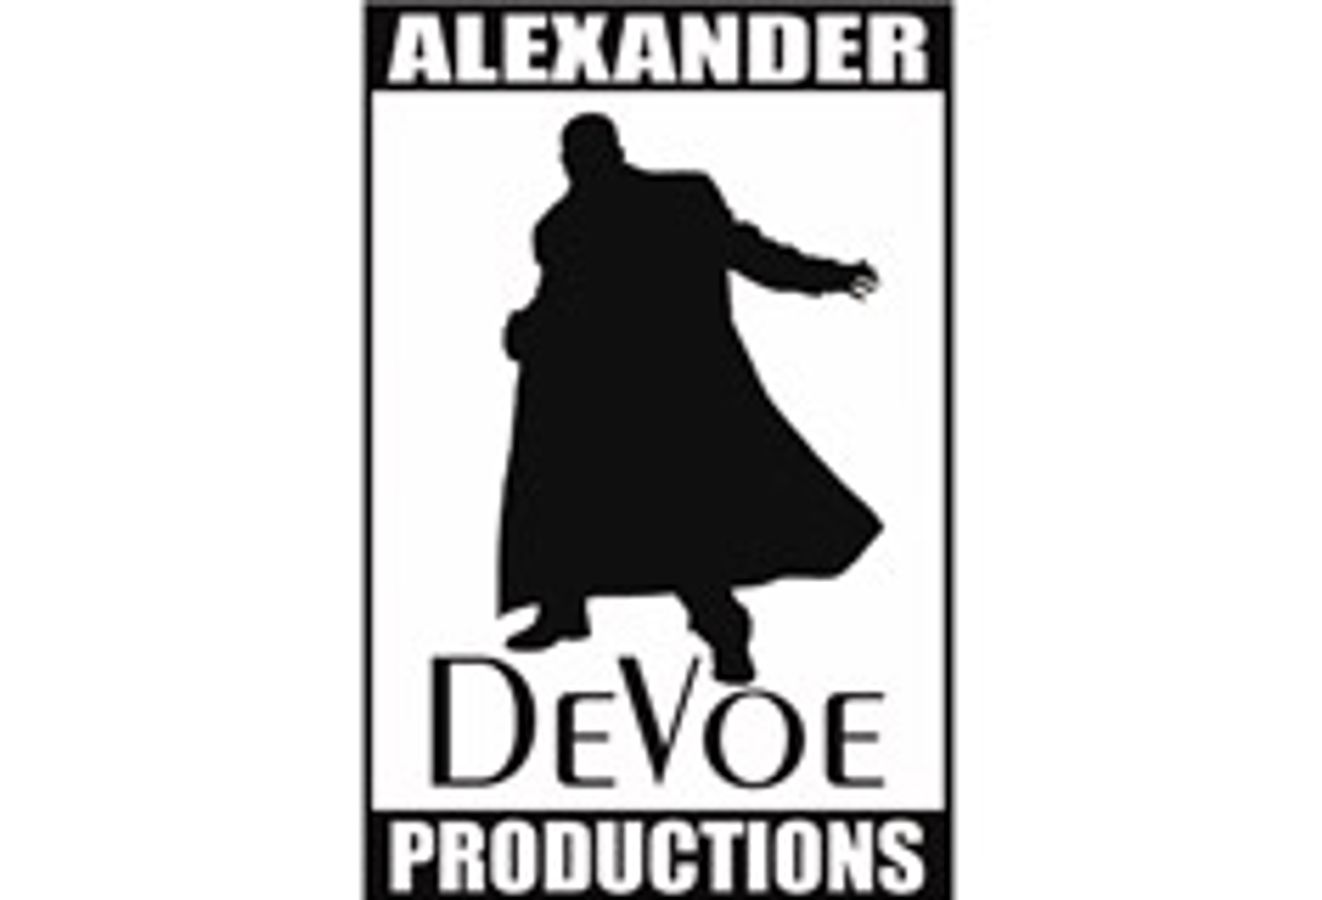 Alexander DeVoe Productions